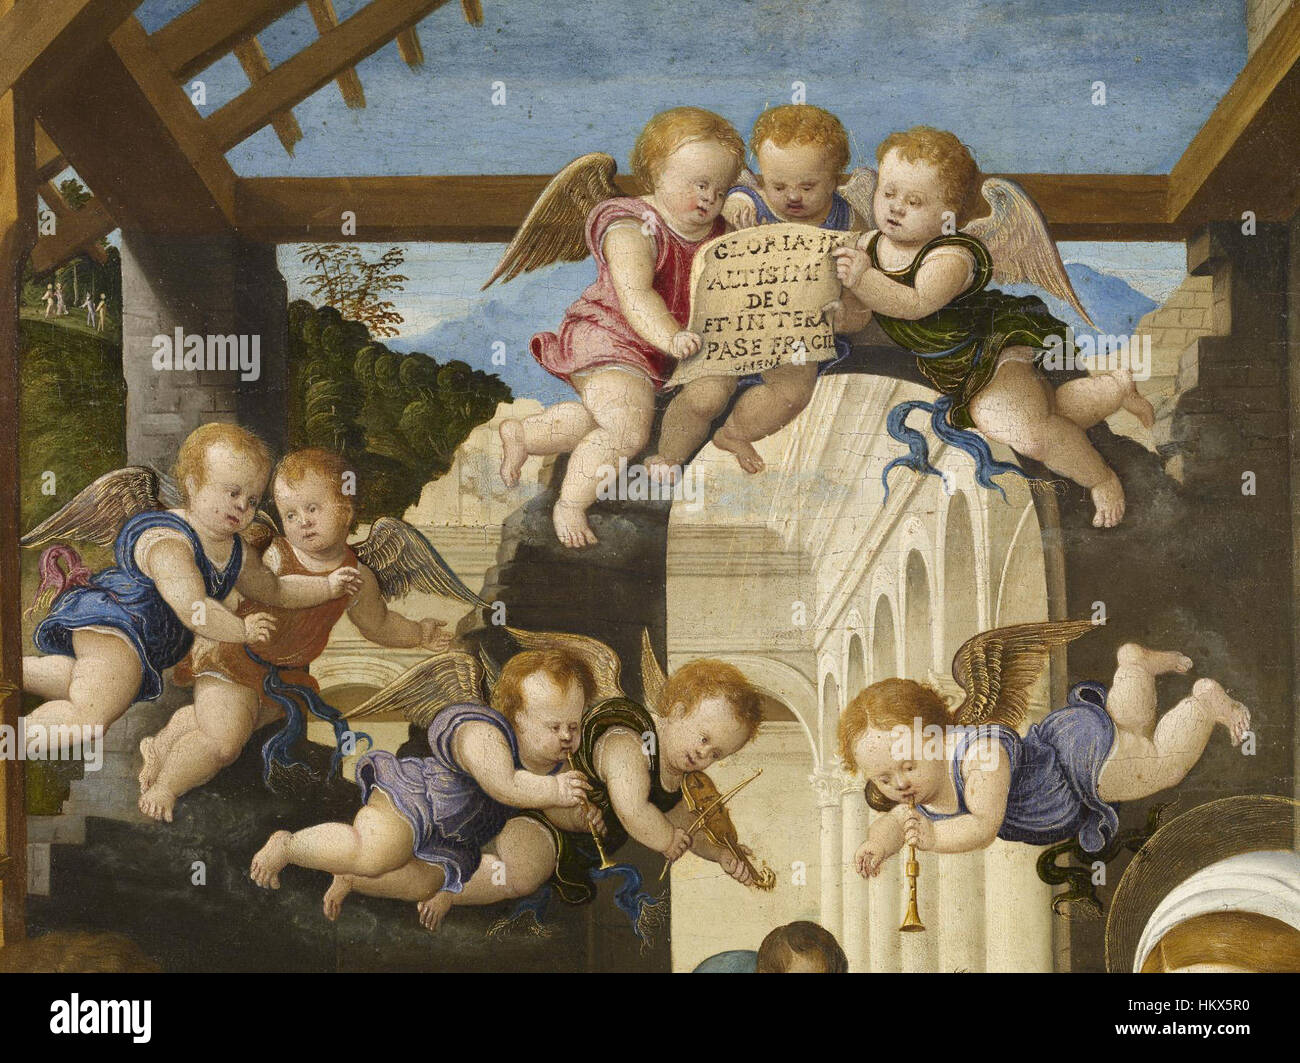 Girolamo da Santacroce - die Anbetung der Heiligen drei Könige - Walters 37261 - Detail B Stockfoto